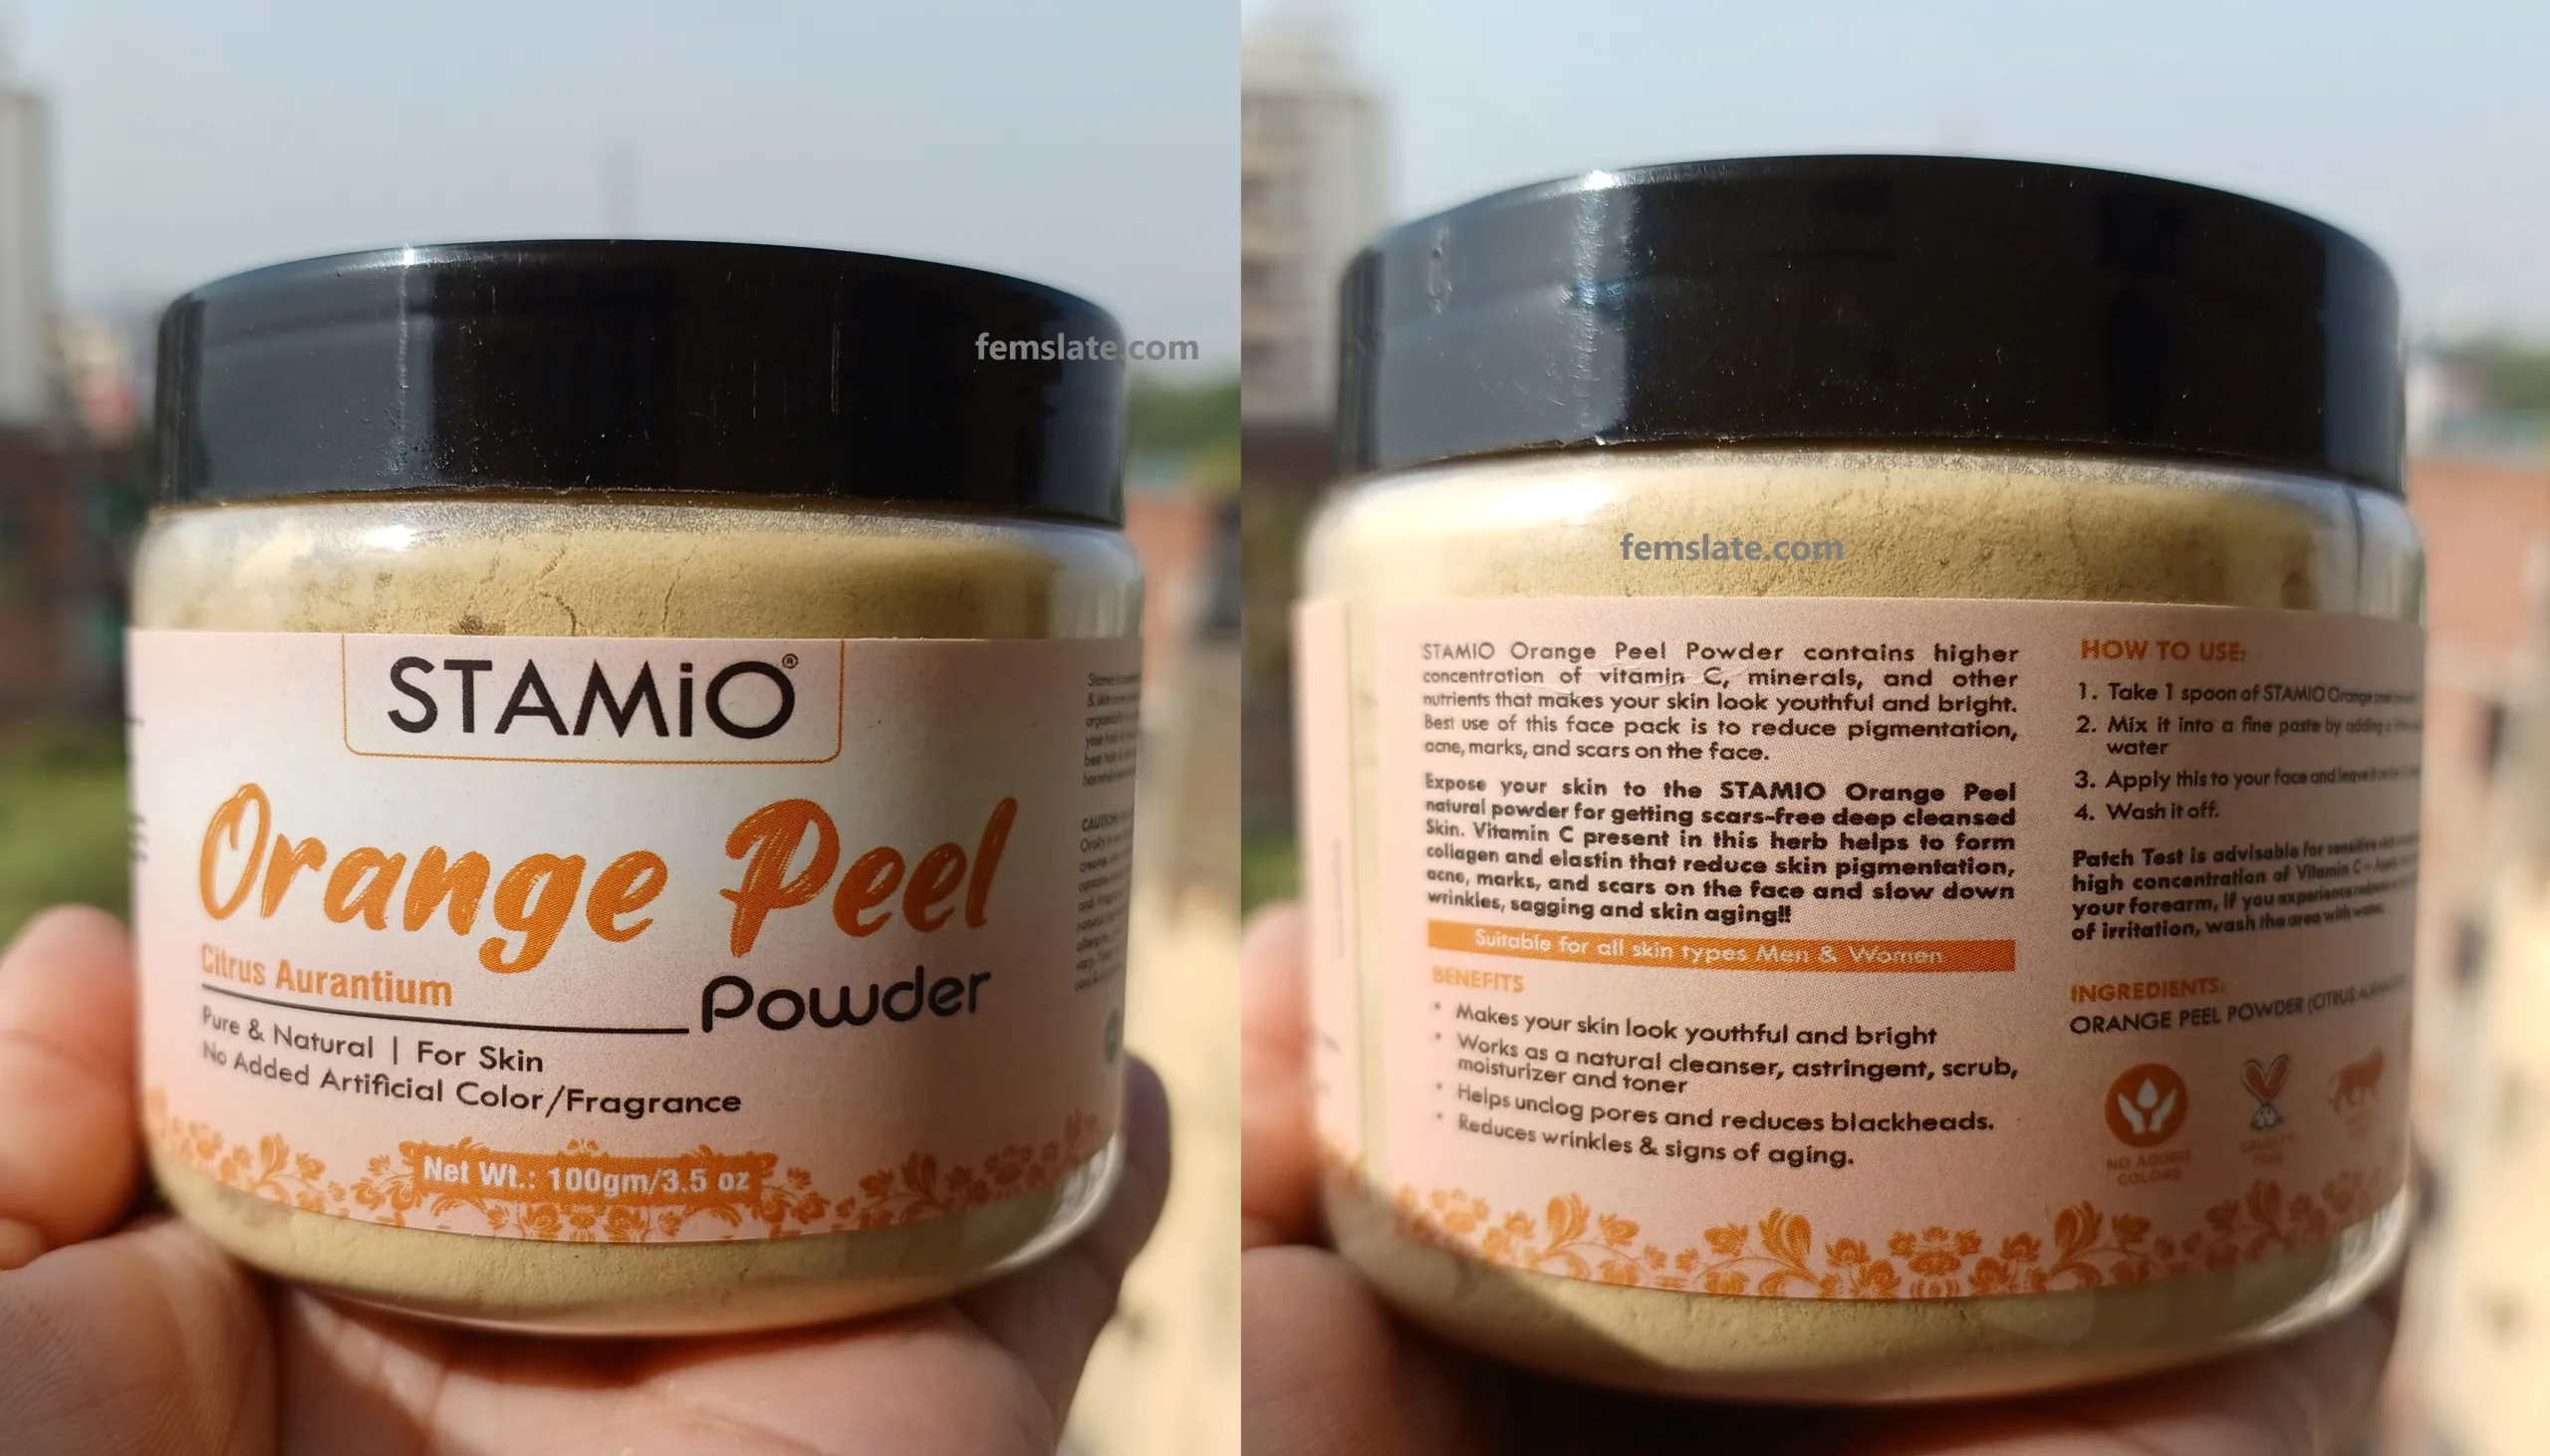 Stamio Orange Peel Powder Review